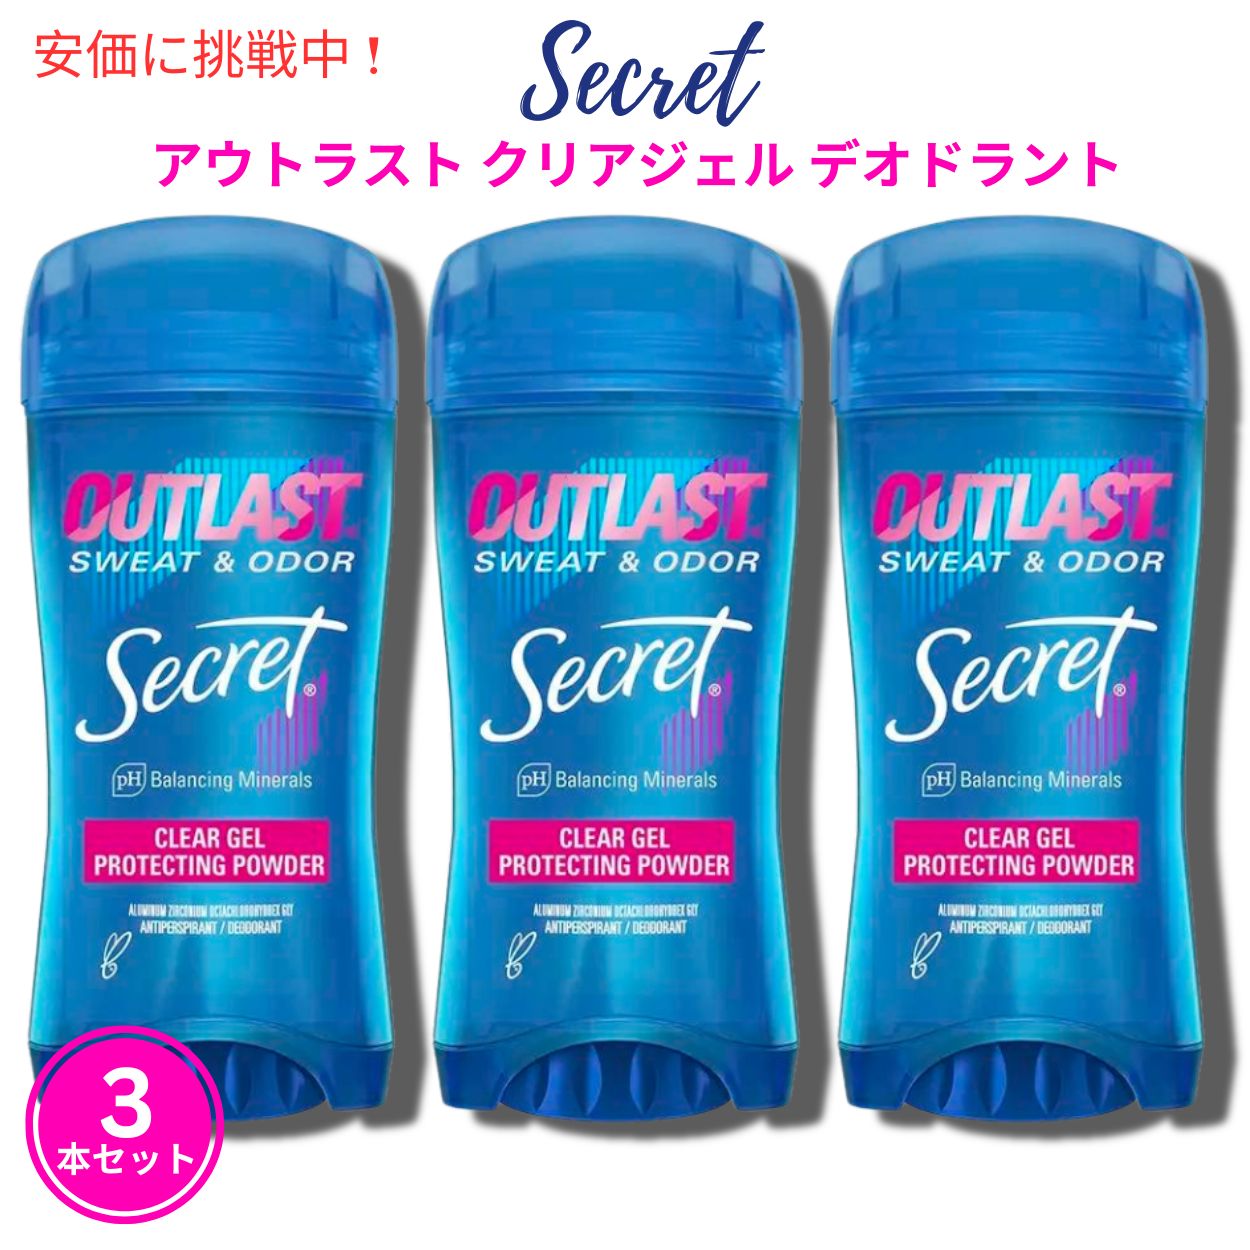 Secret Outlast Protecting Powder Clear Gel Deodorant 2.6oz / シークレット デオドラント アウトラスト